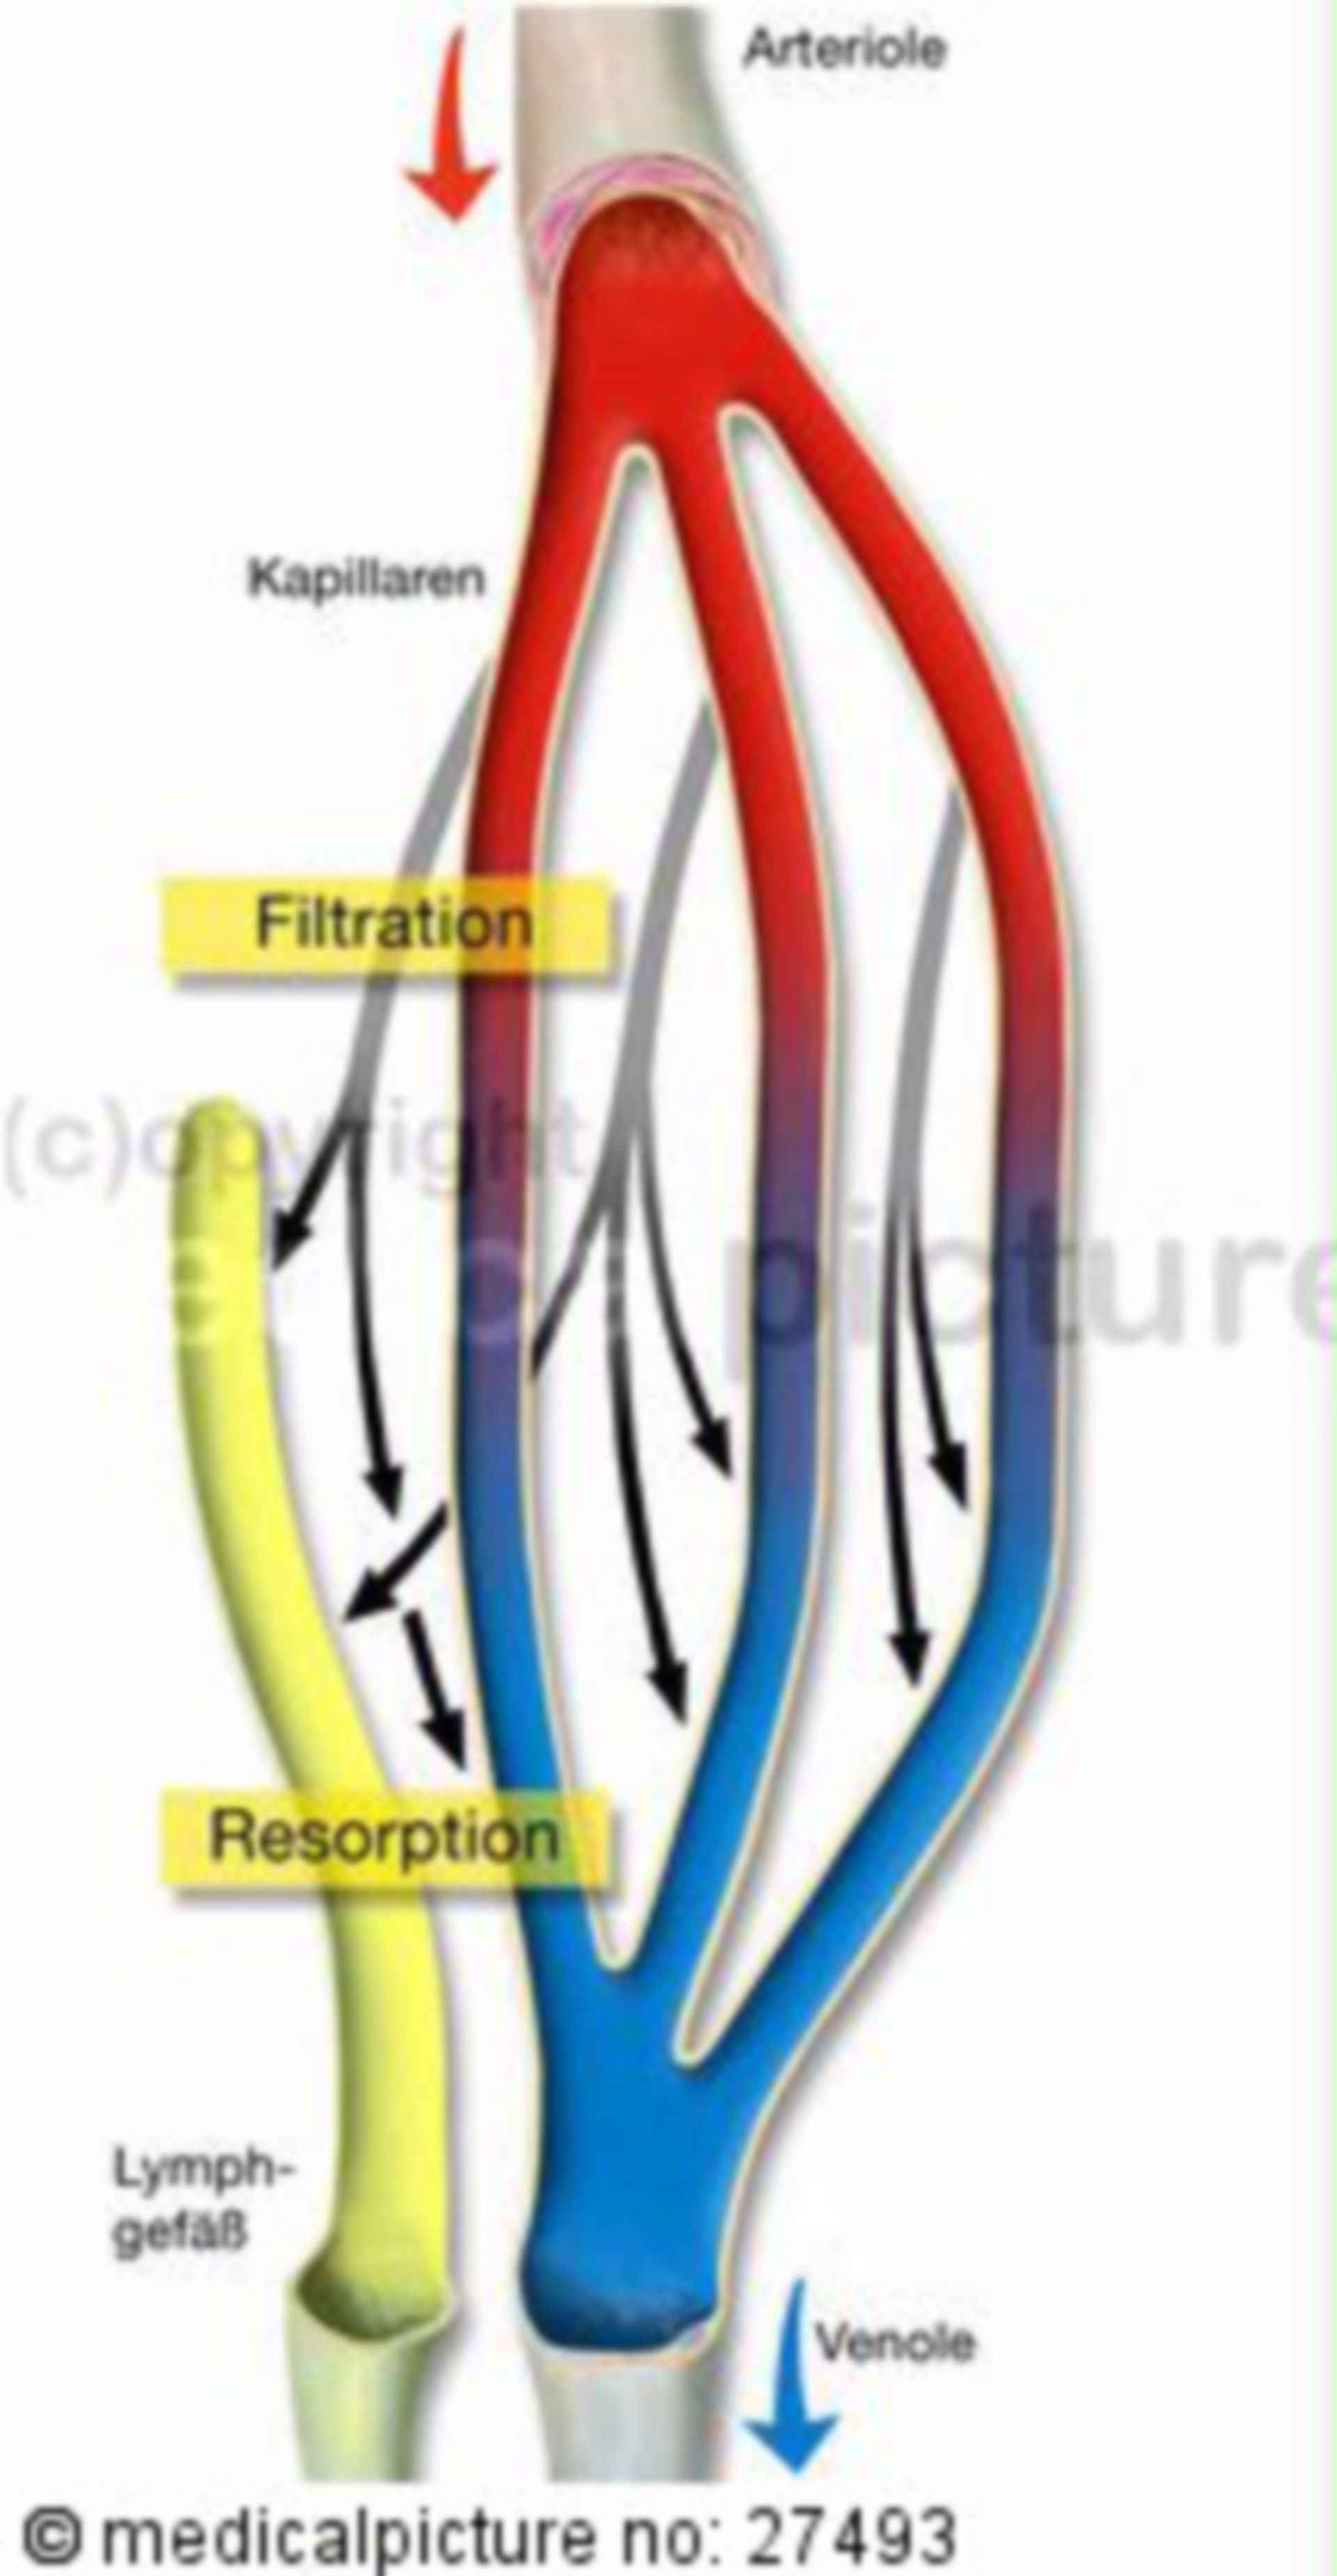 Circulation, Filtration and Resorption